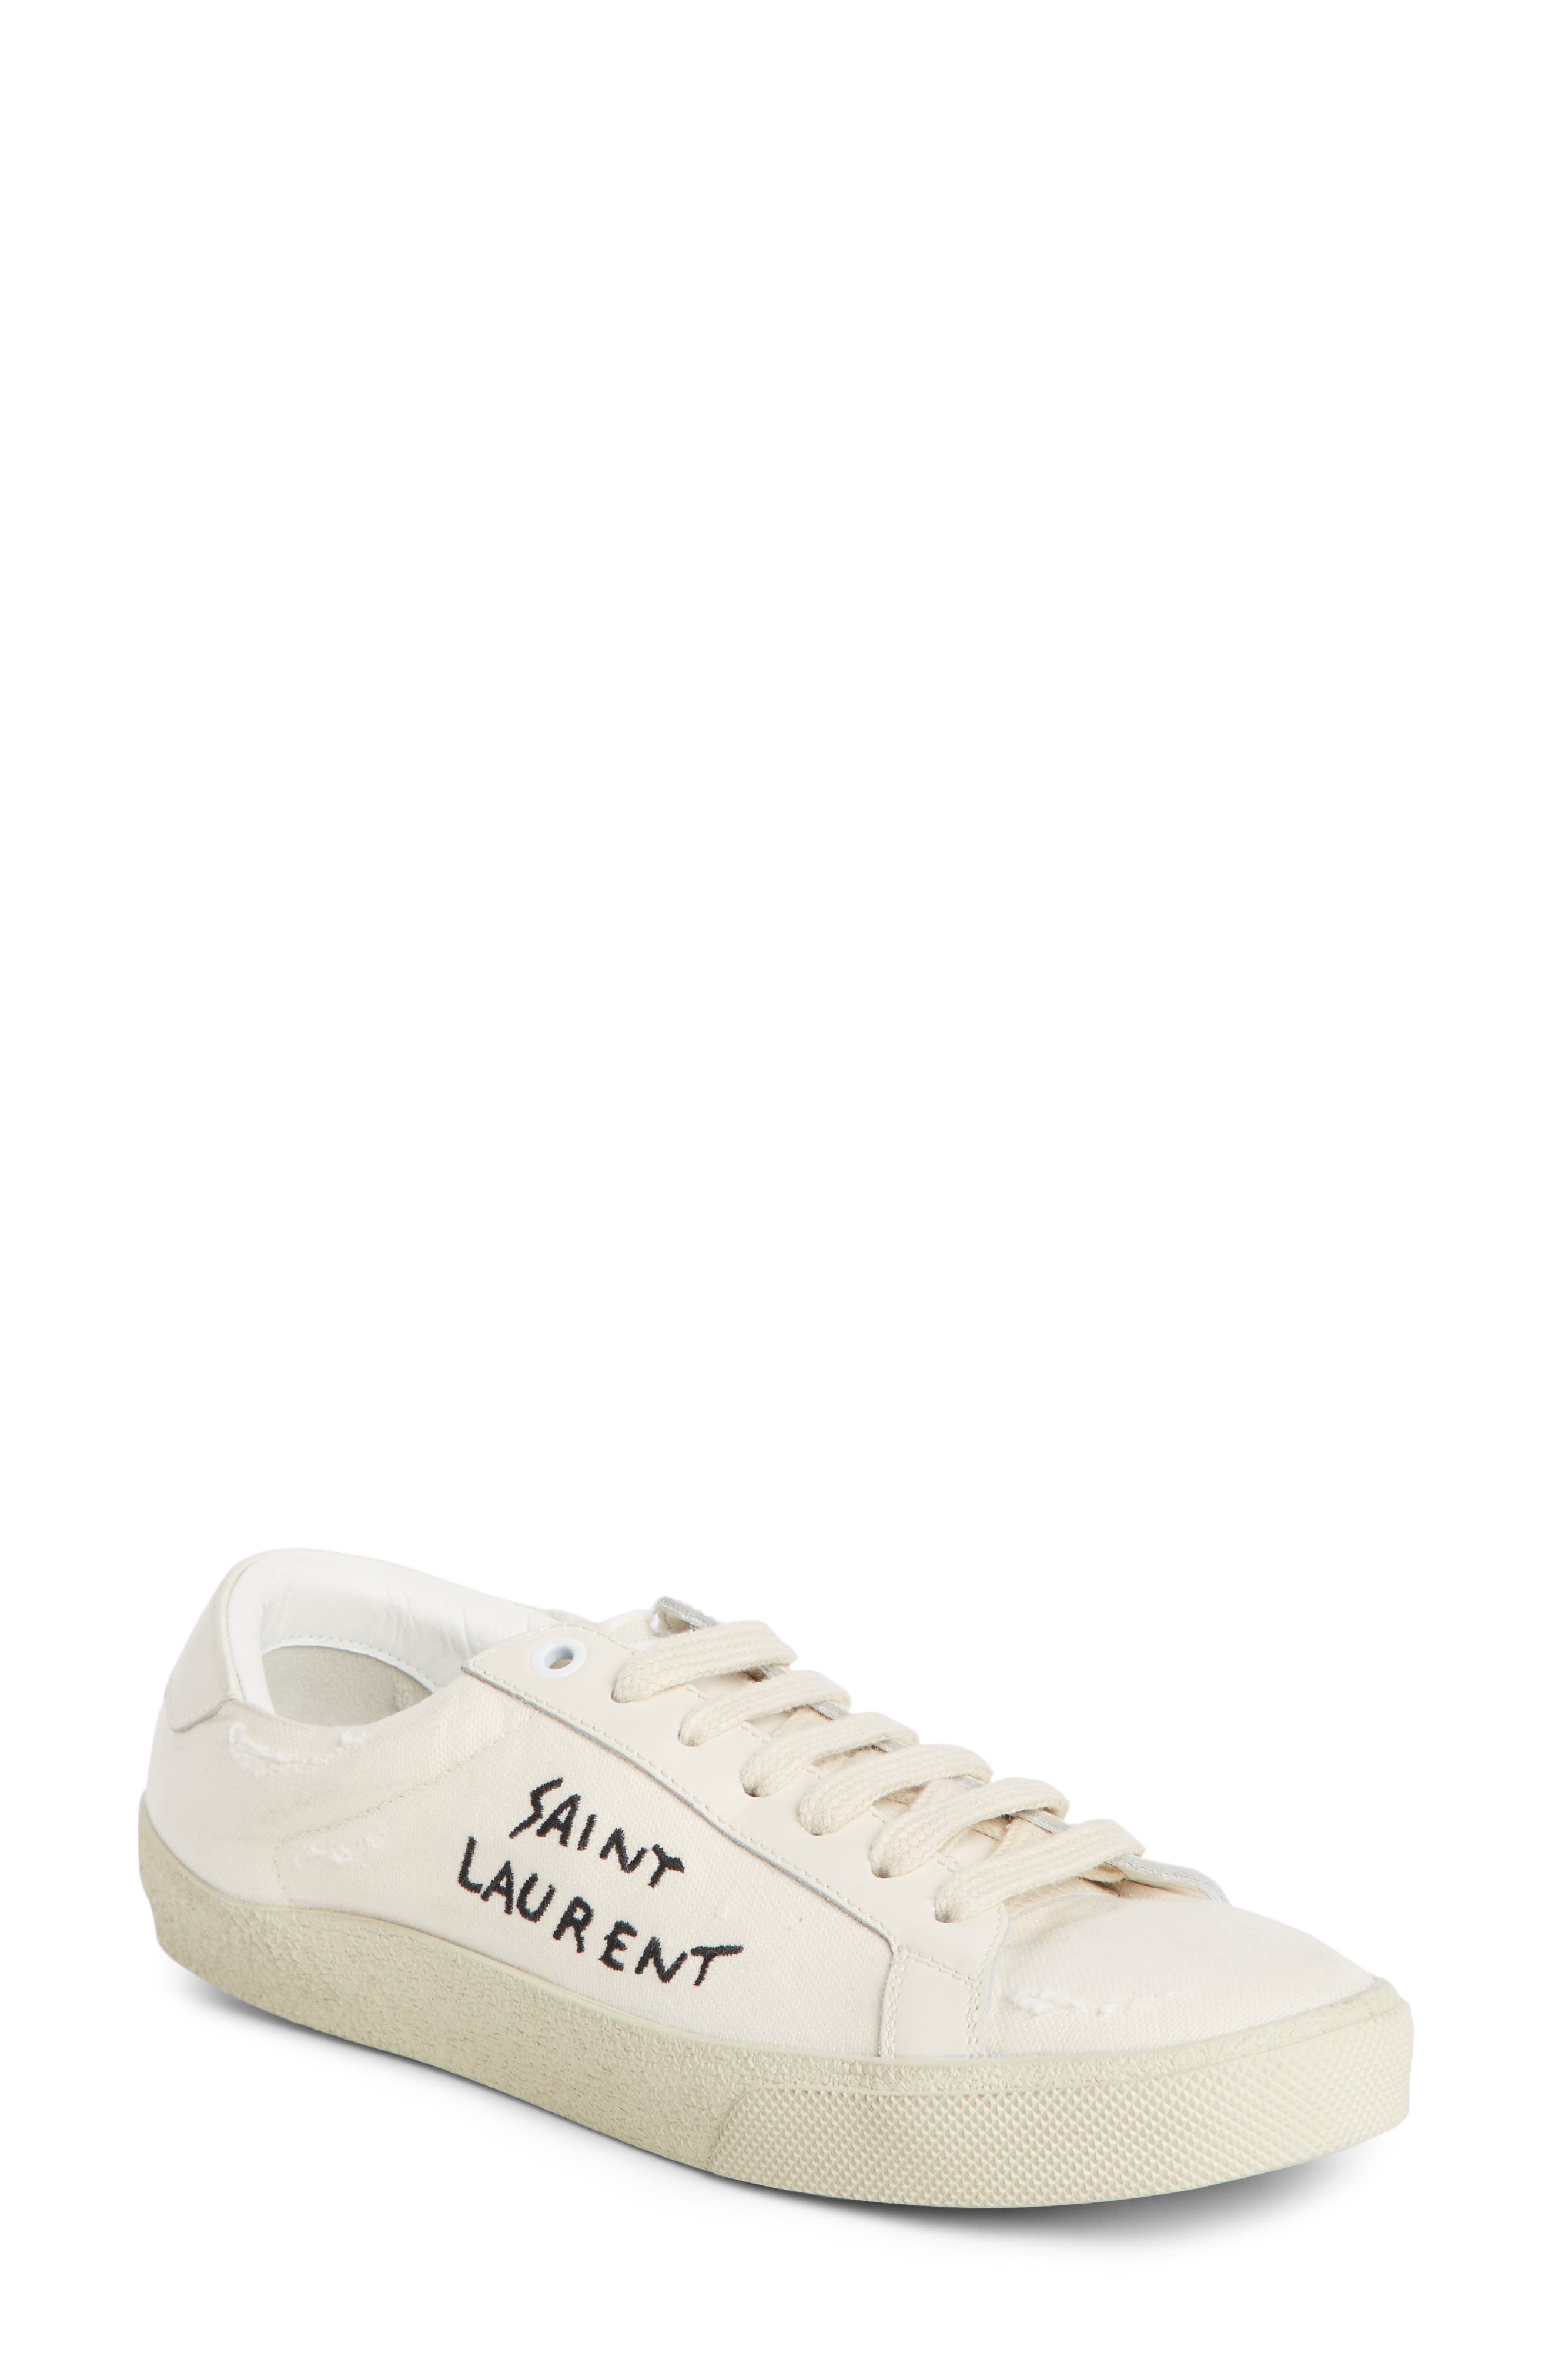 yves saint laurent white shoes